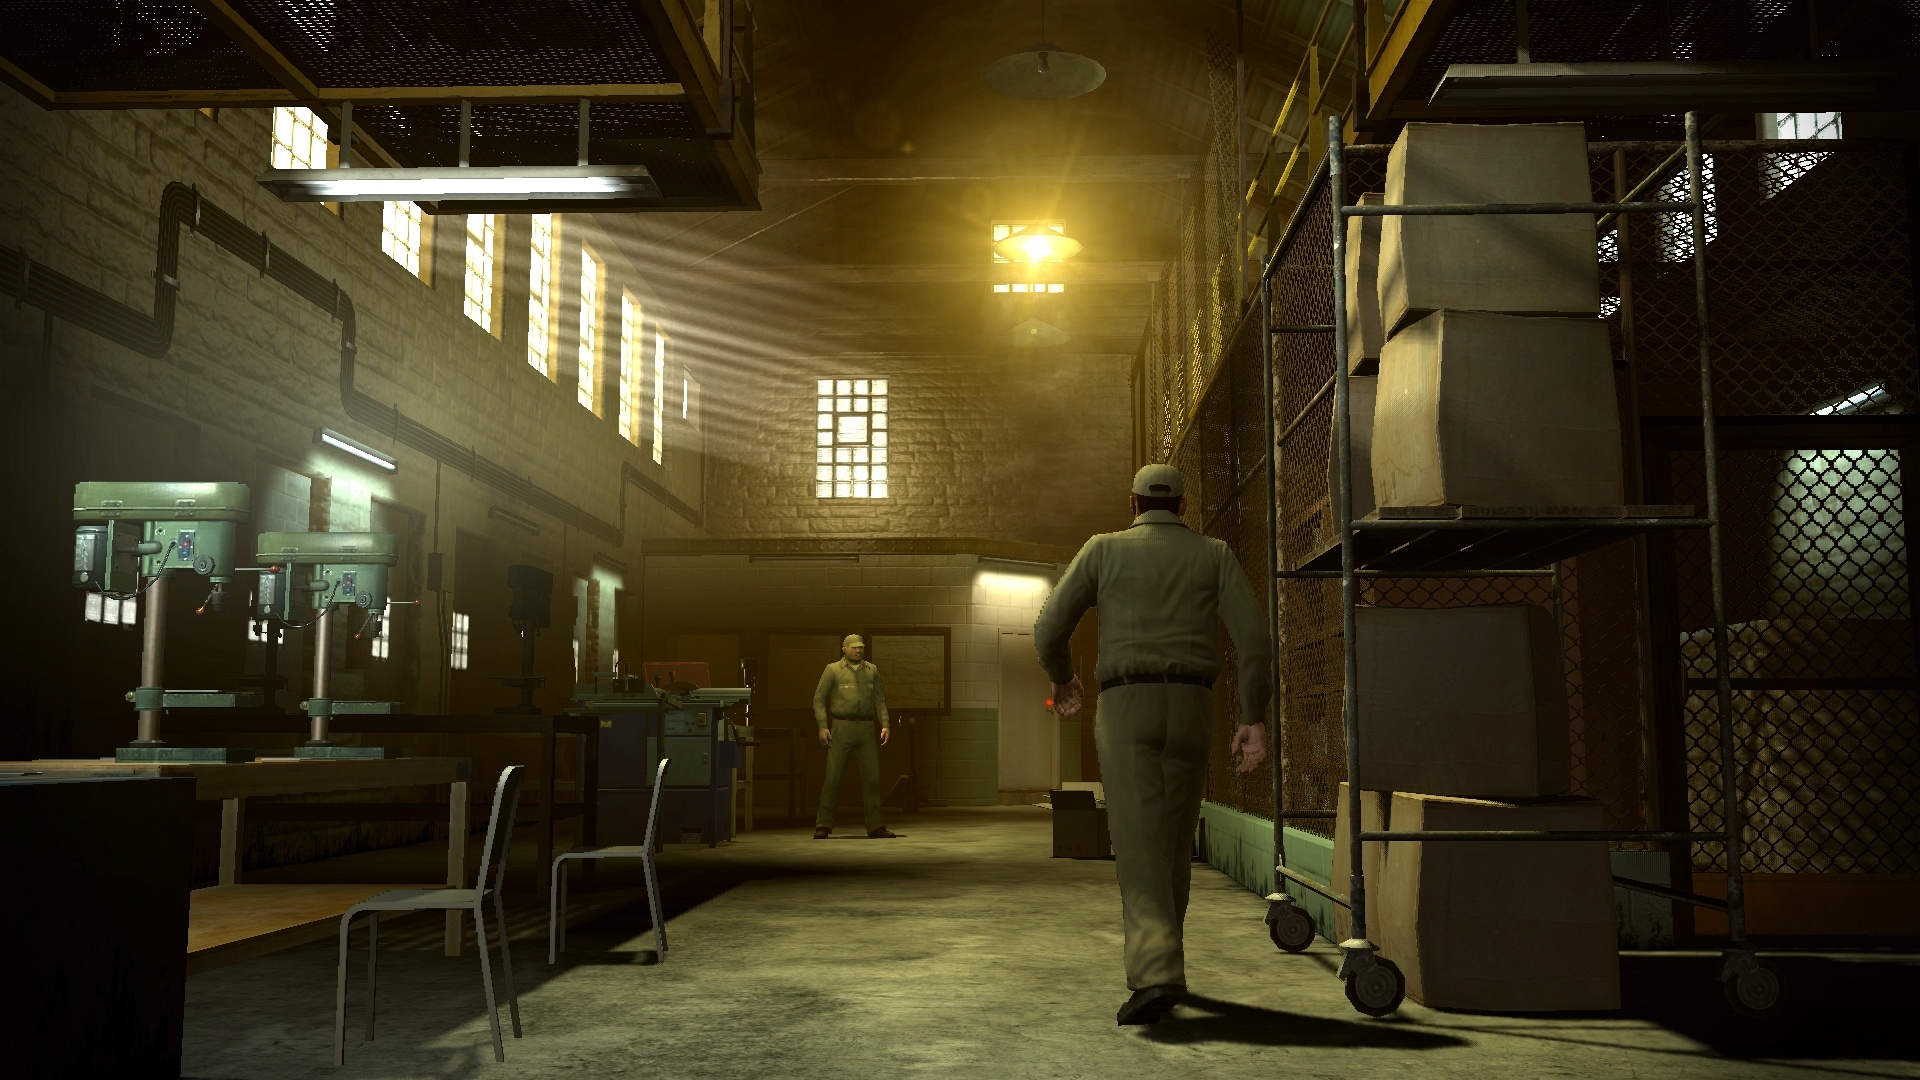 Игра цифровой побег. Игра Prison Break 2. Побег с тюрьмы игра. ПРИЗОН брейк игра. Игра побег на Xbox 360.